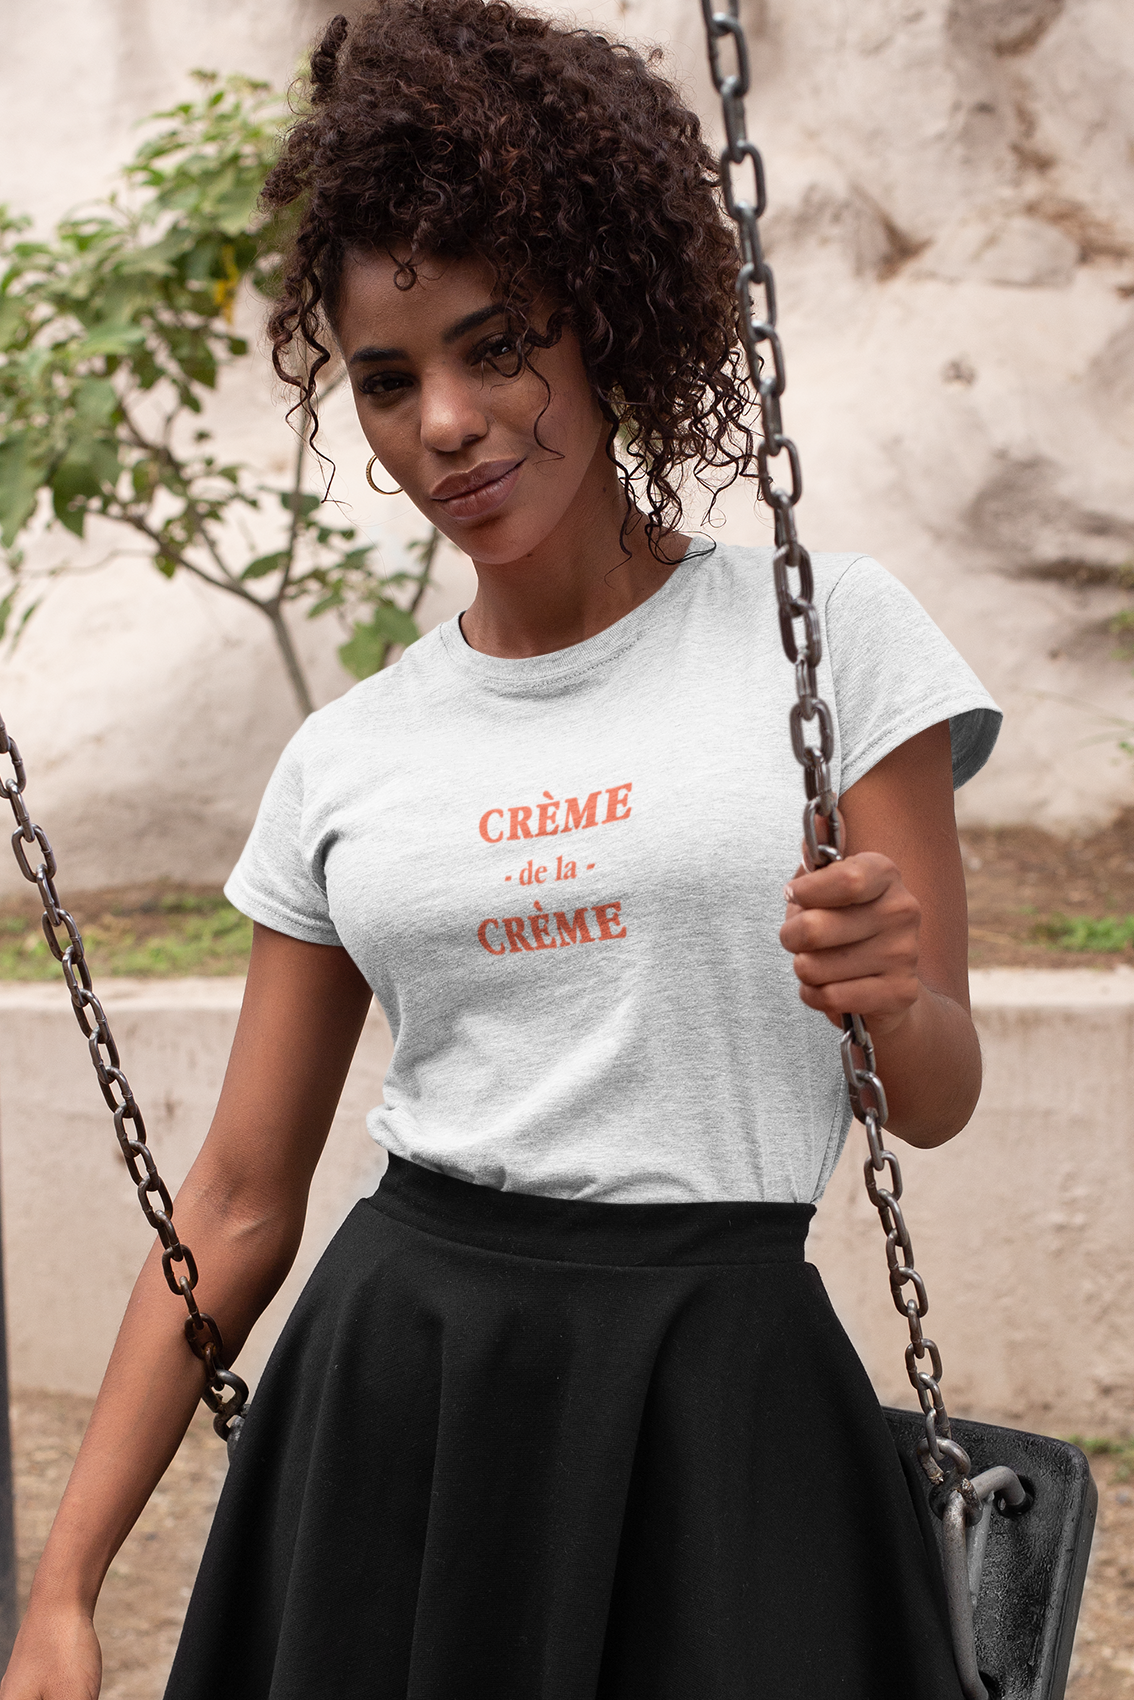 T-shirt "Crème de la crème"